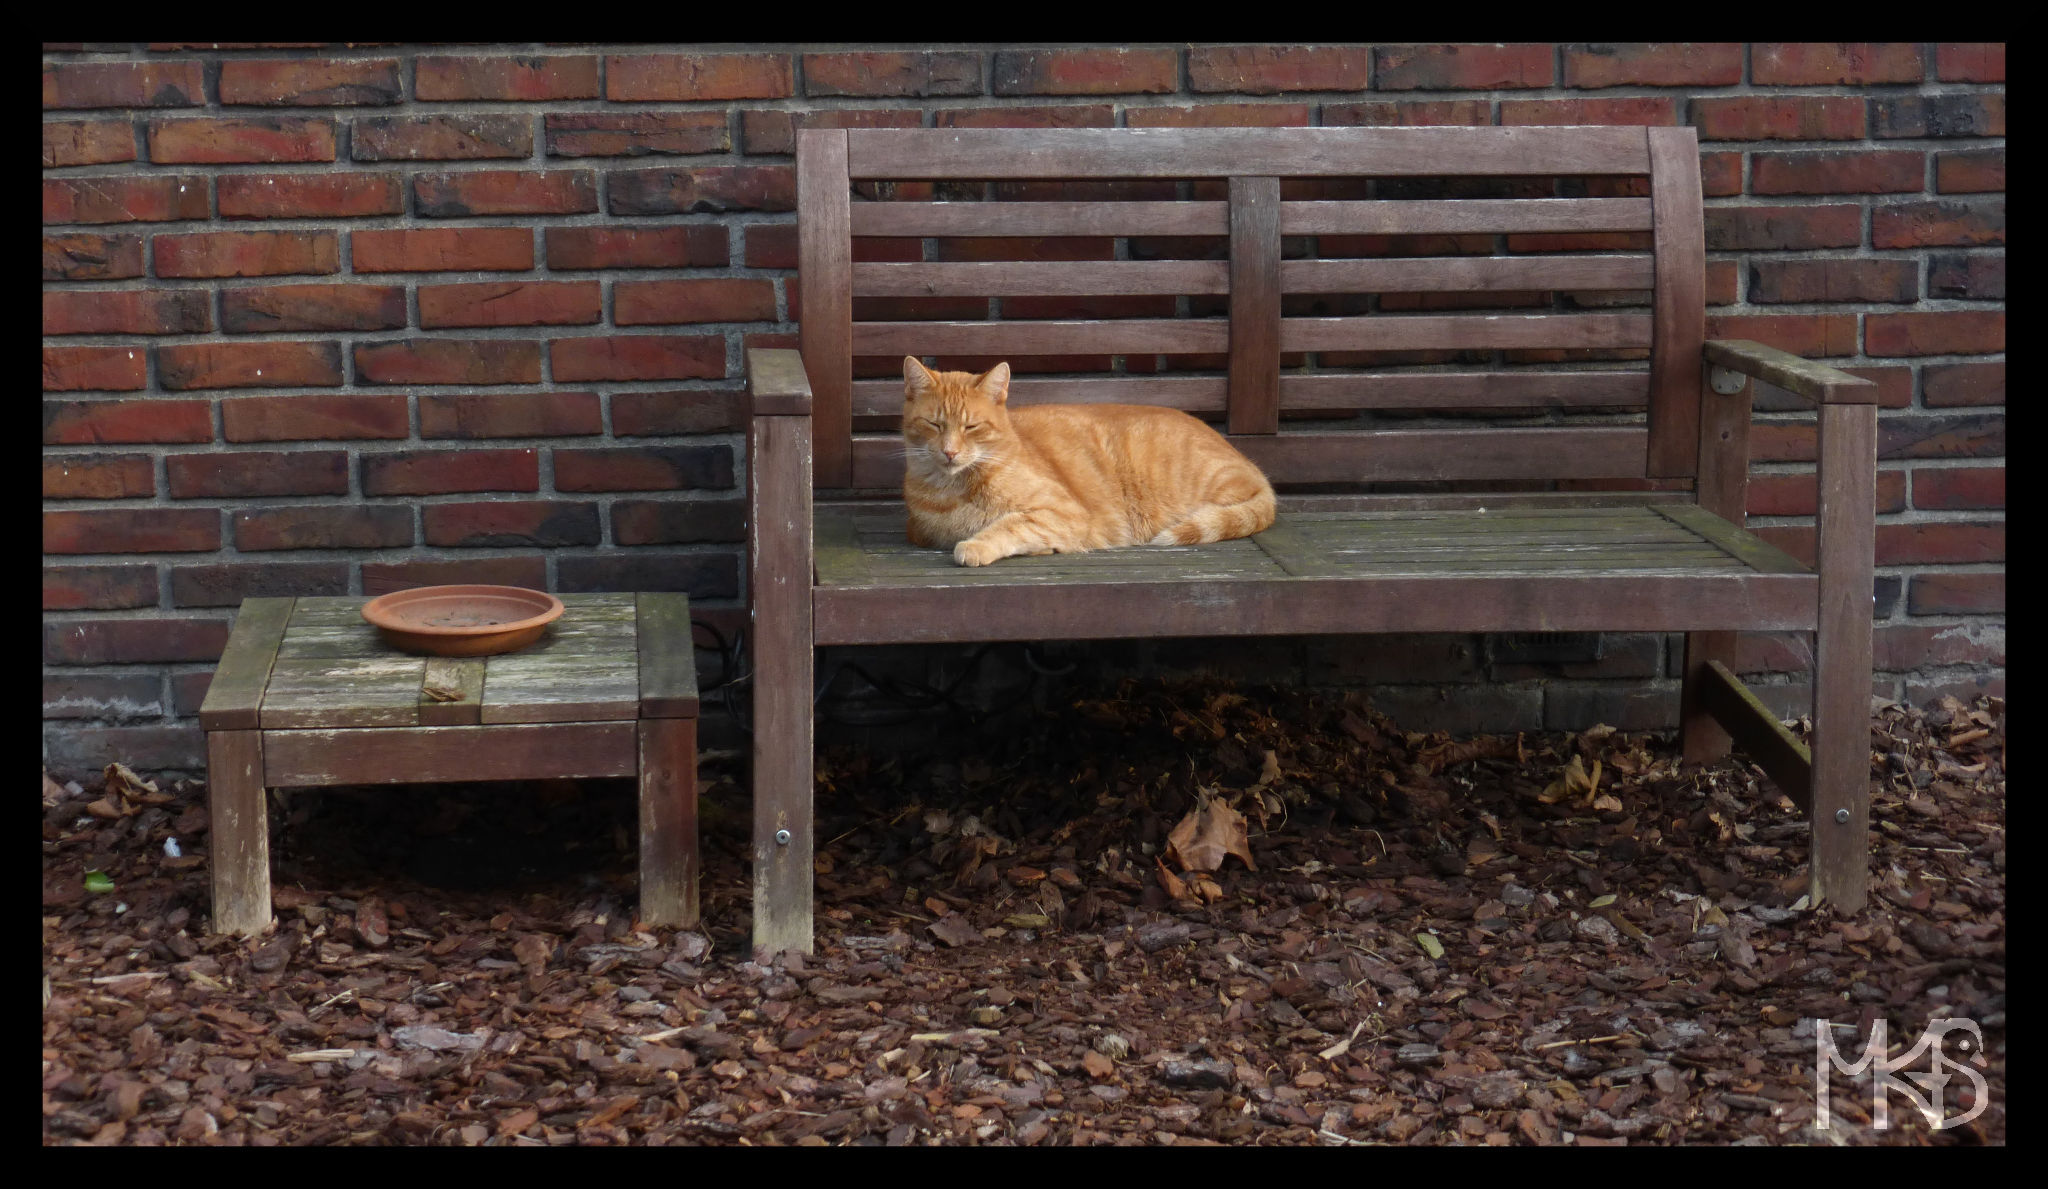 Sleeping on the bench